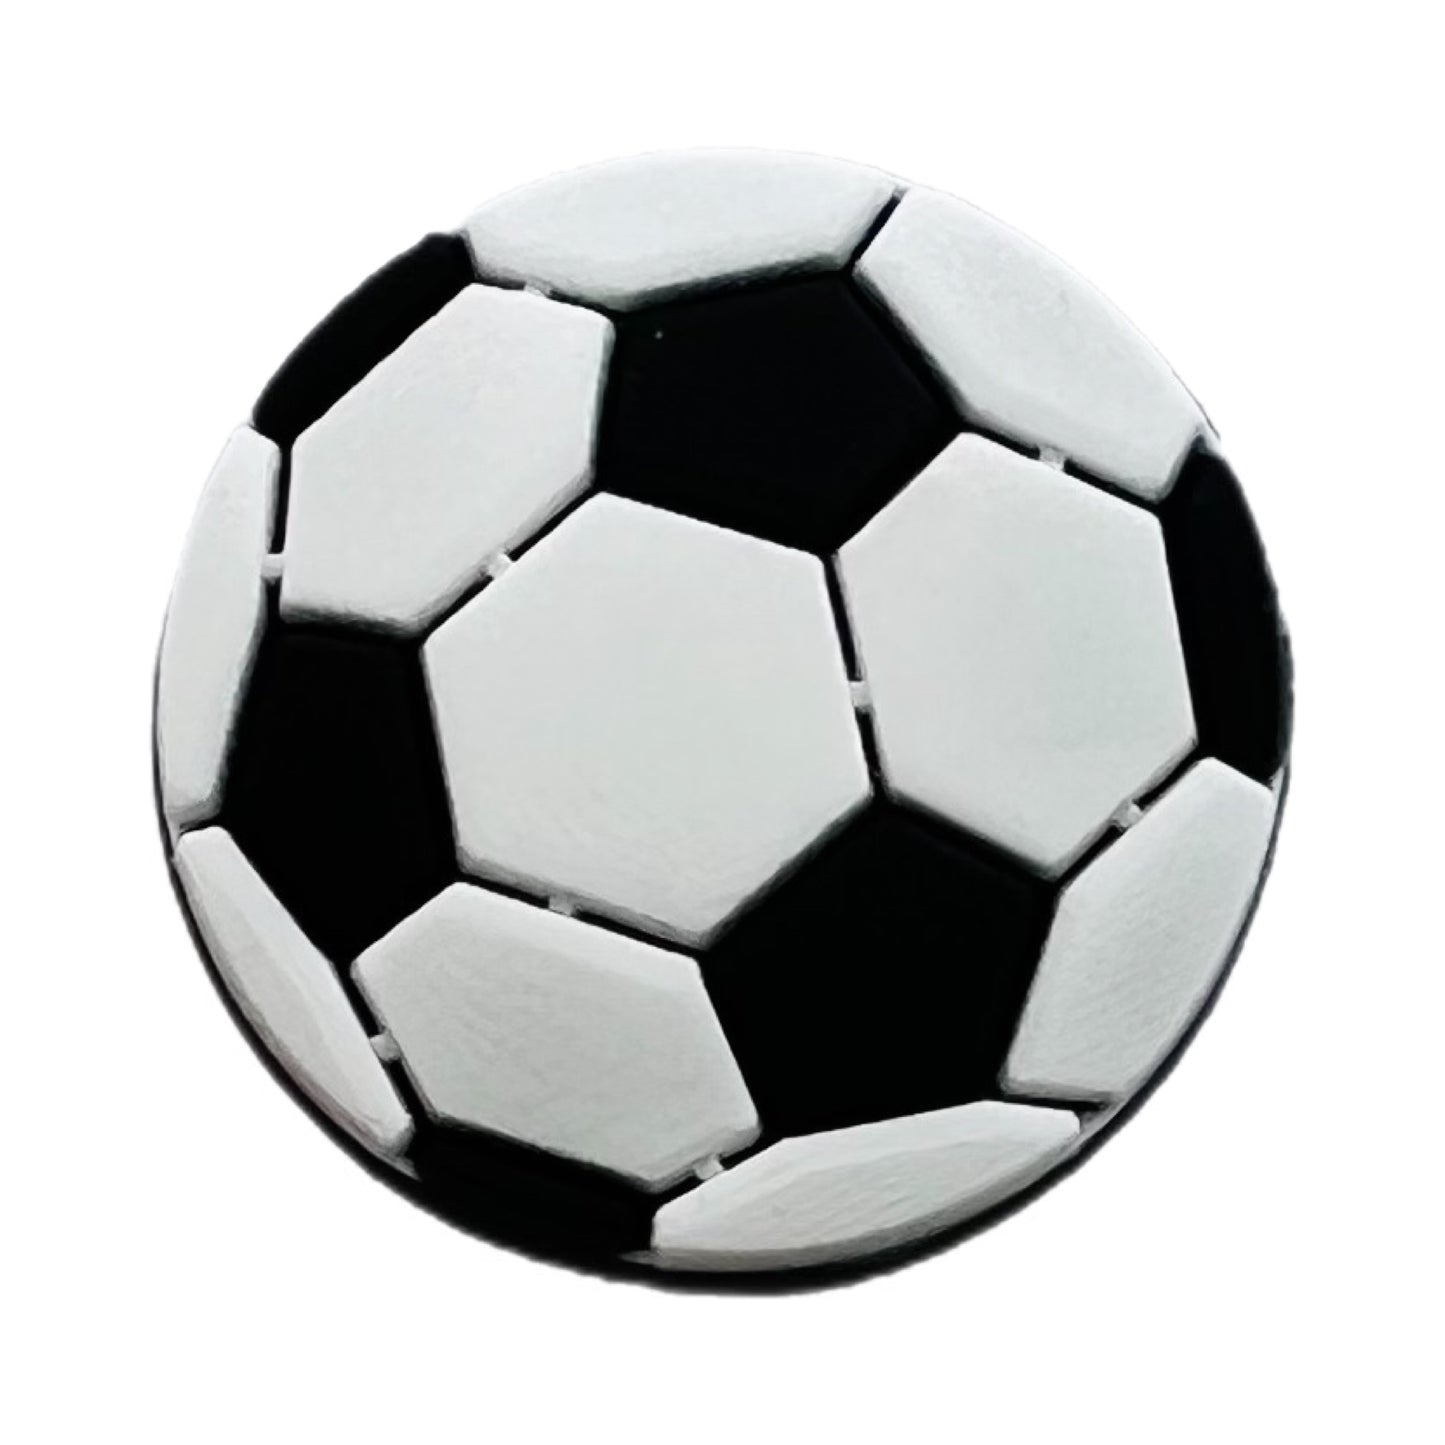 Soccer Ball Shoe Charm